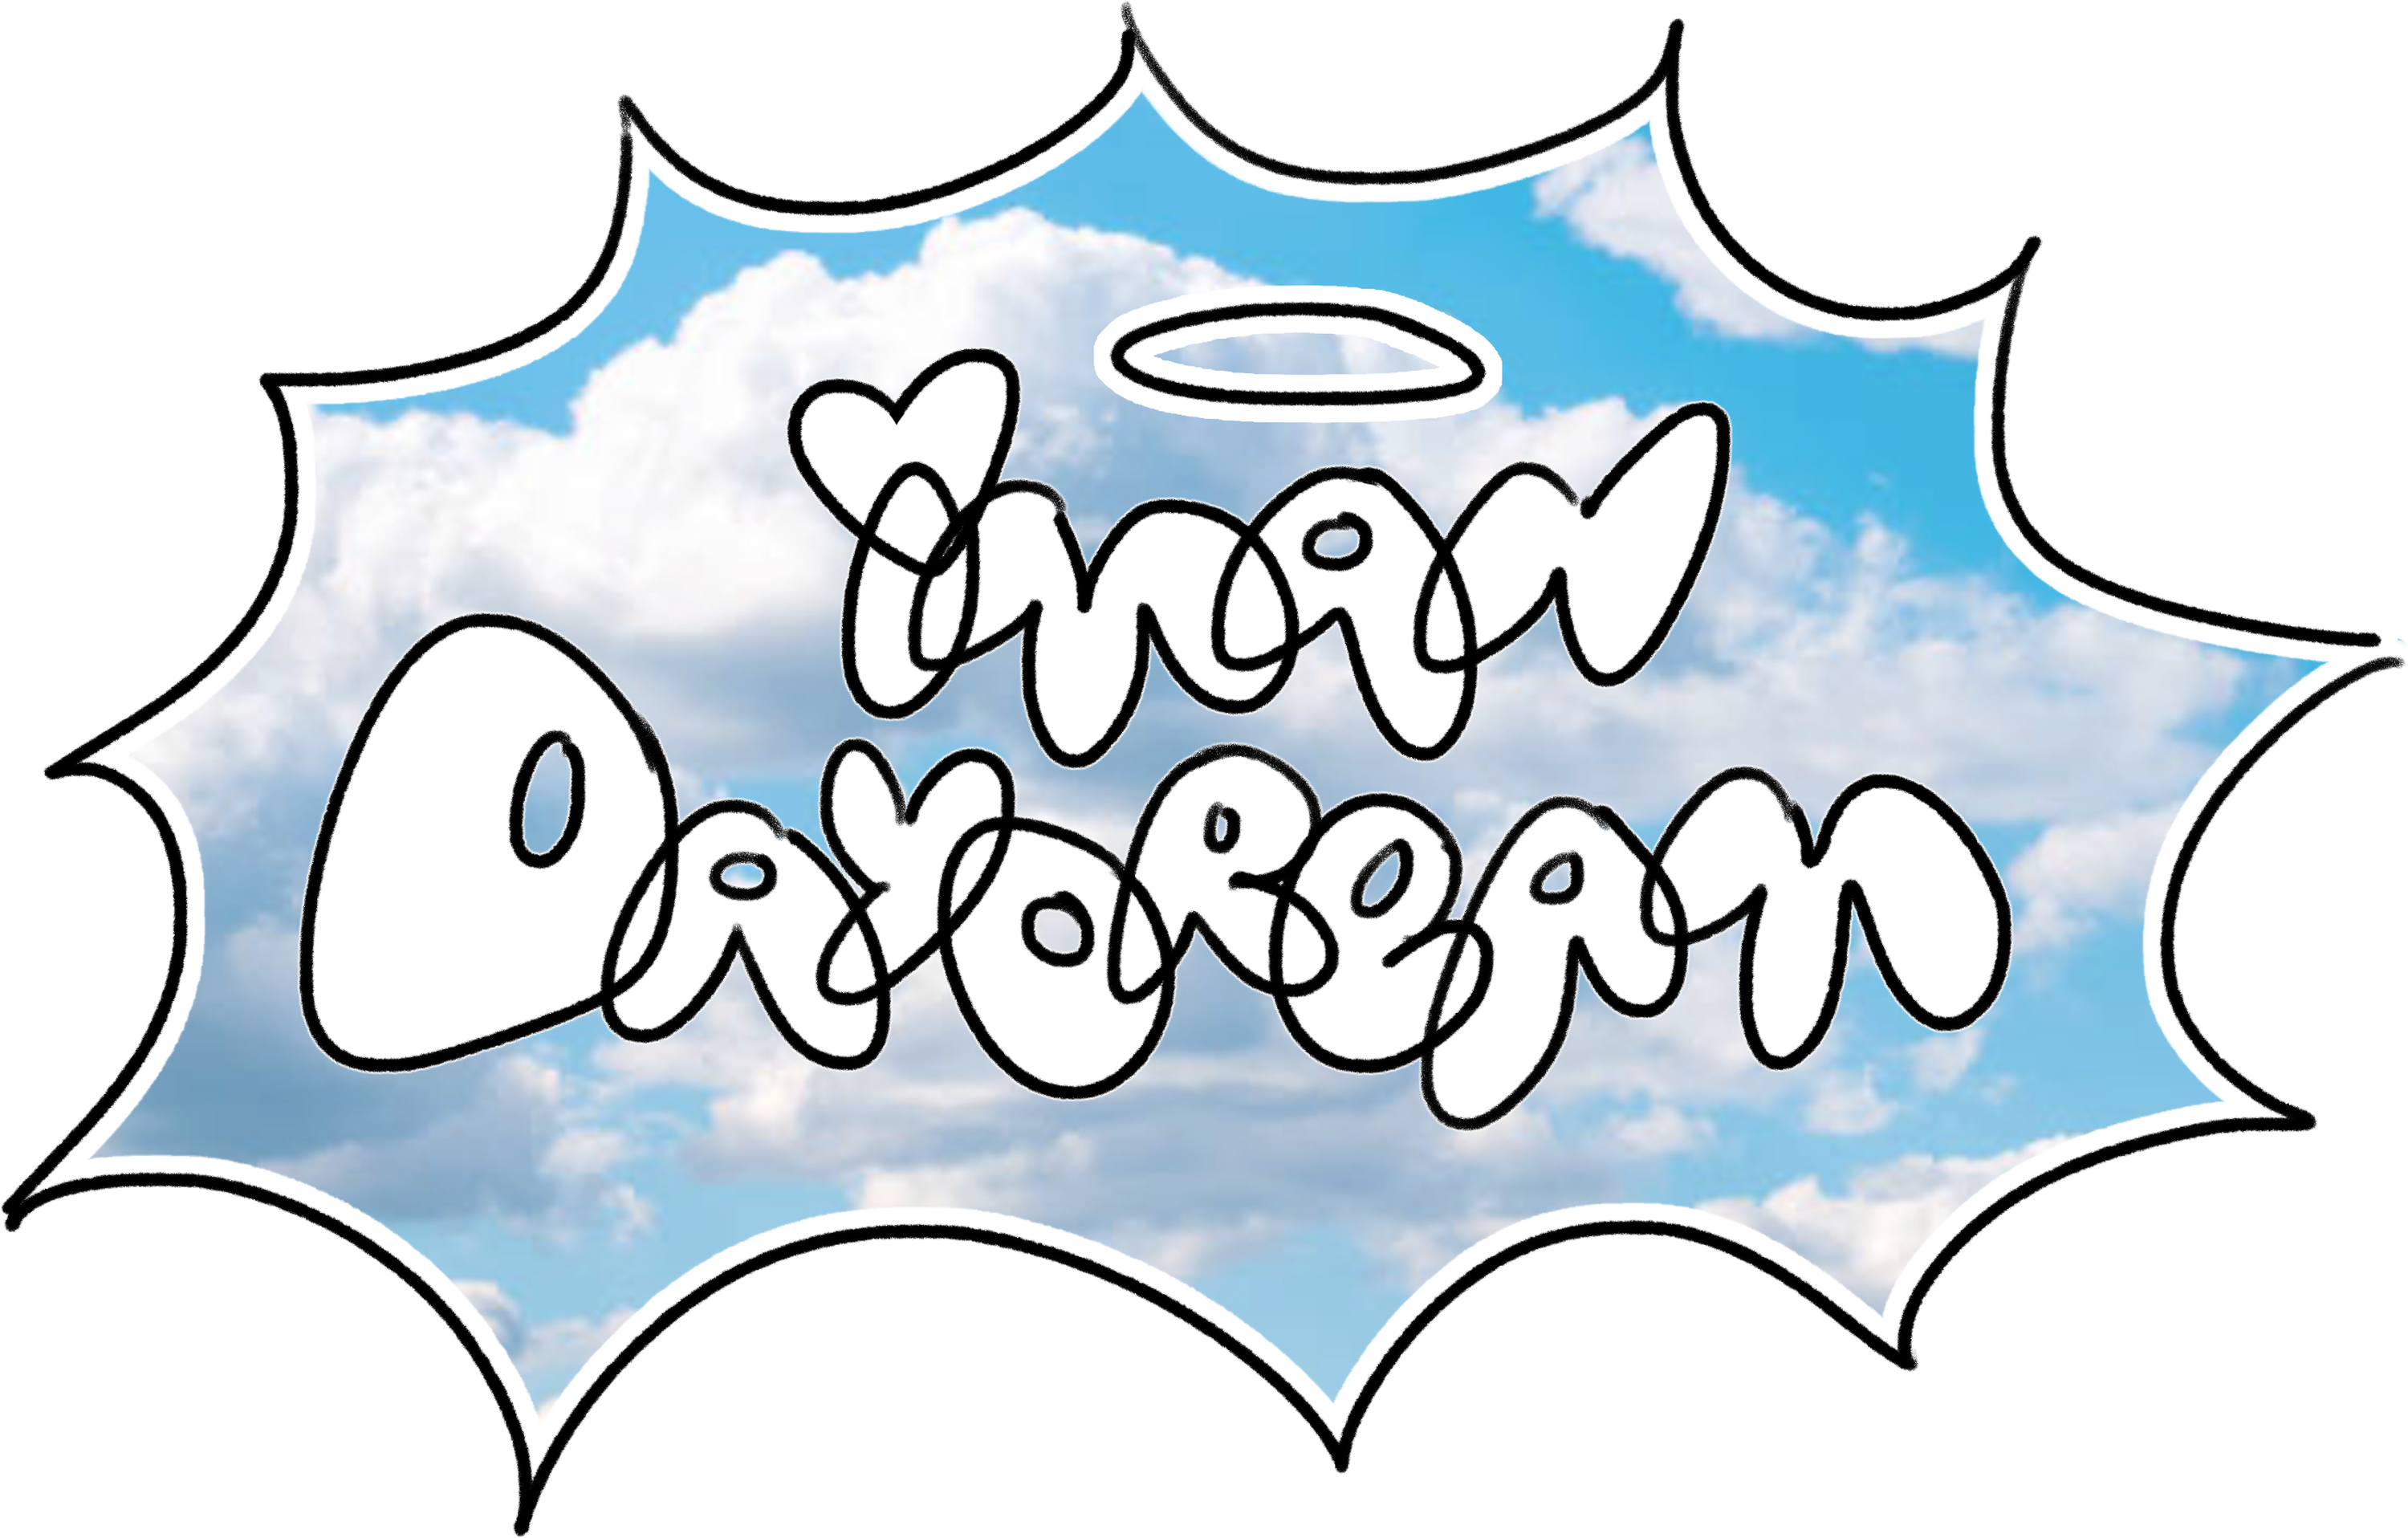 iman daydream